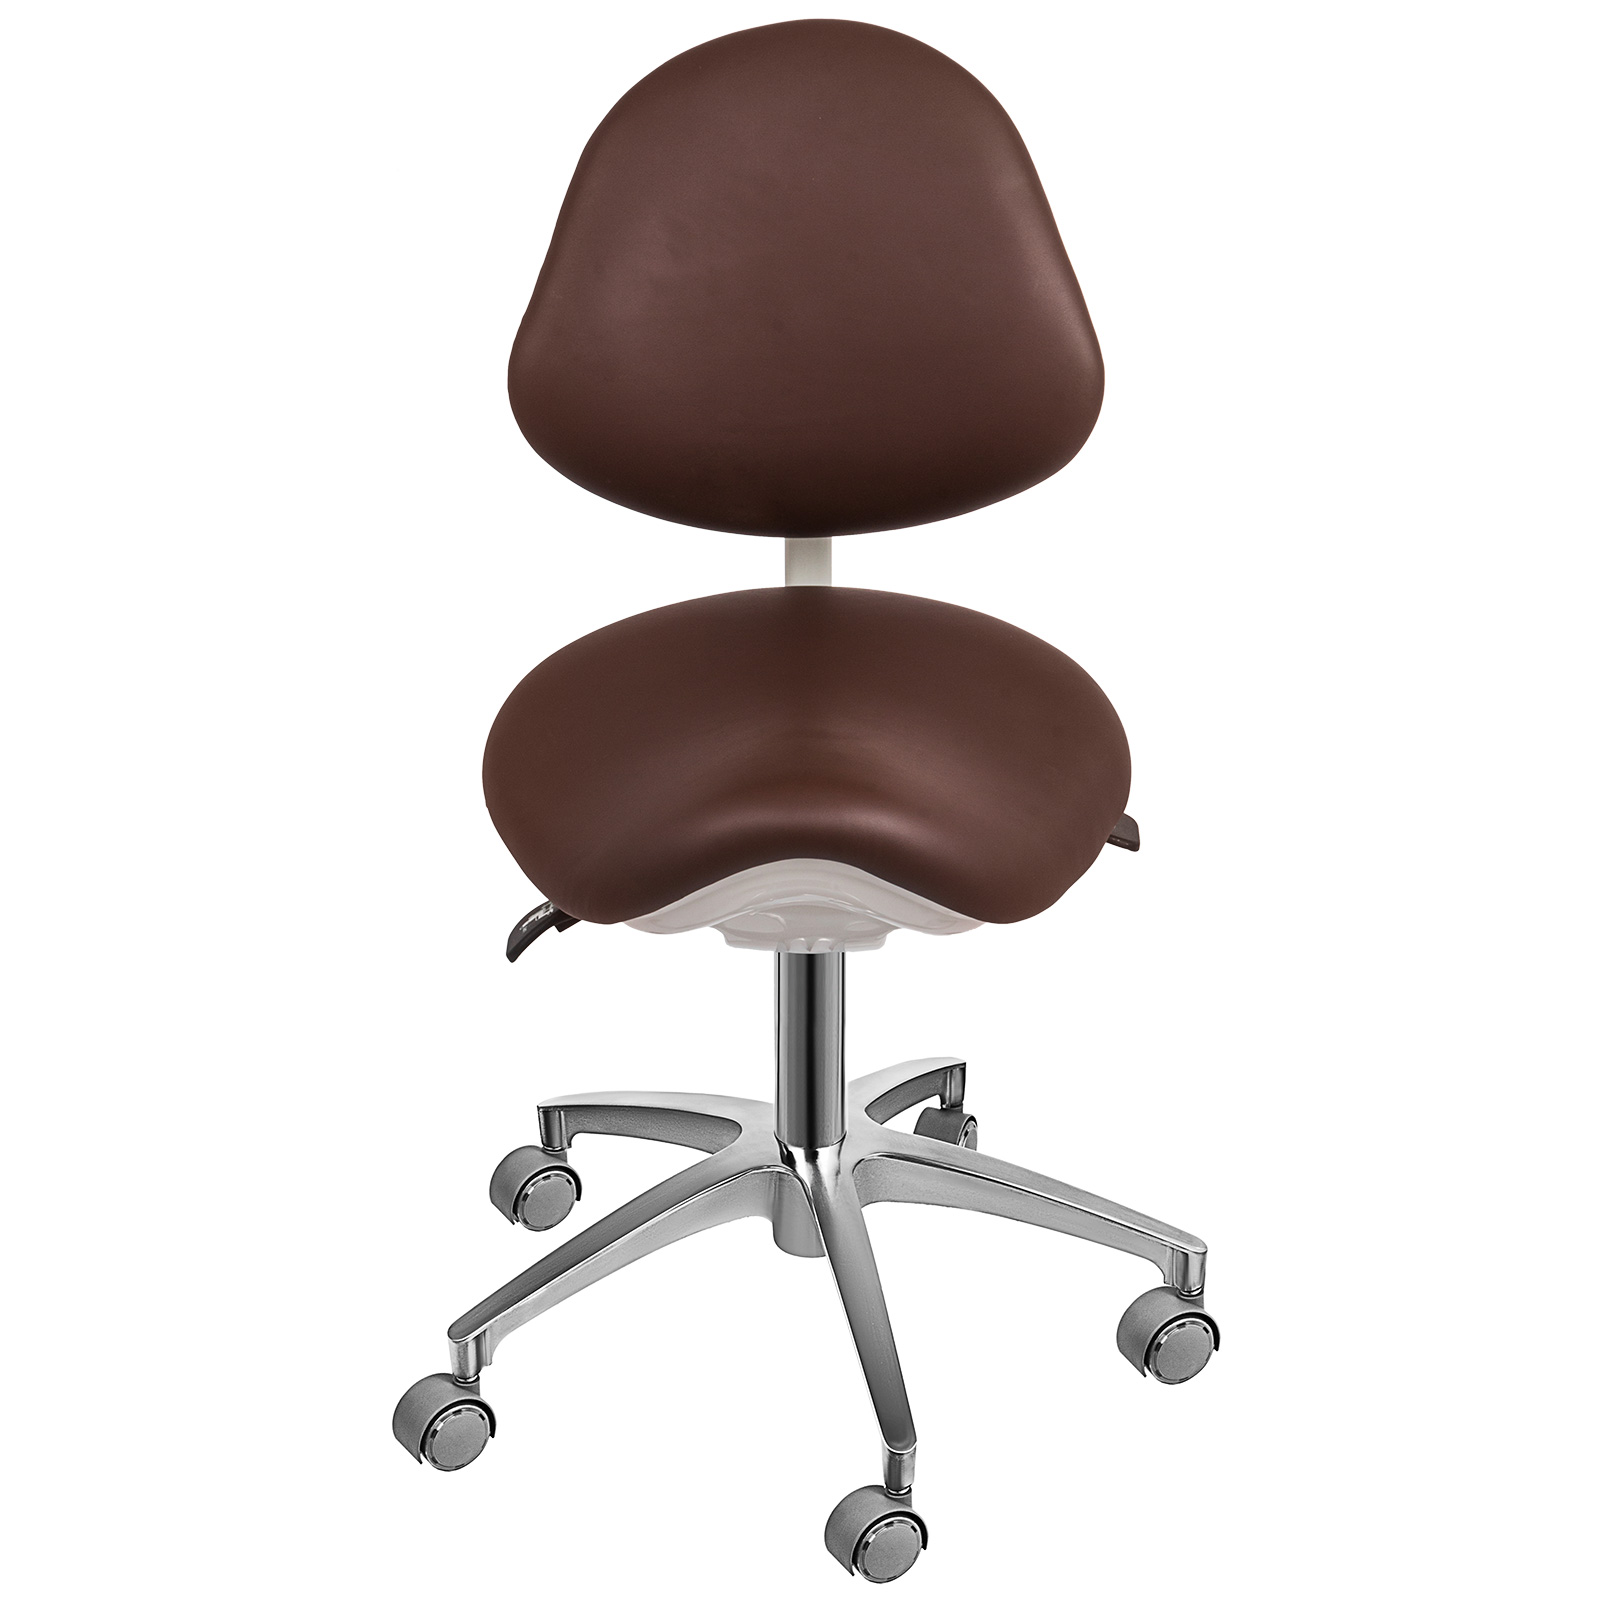 3 Colors Saddle Chair Adjustable Dental Stool Mobile